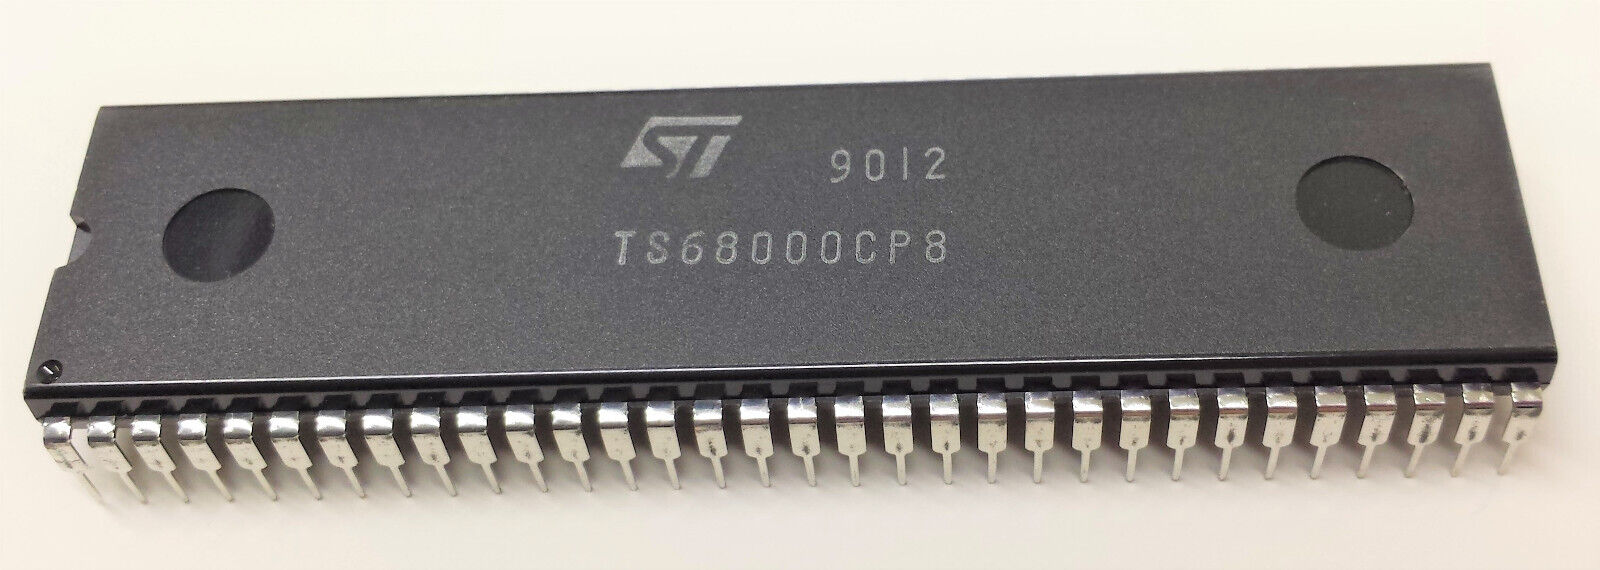 1 piece TS68000CP8 | 8MHz | DIP64 | 68000 | Atari Commodore AMIGA 500 A2000 CDTV